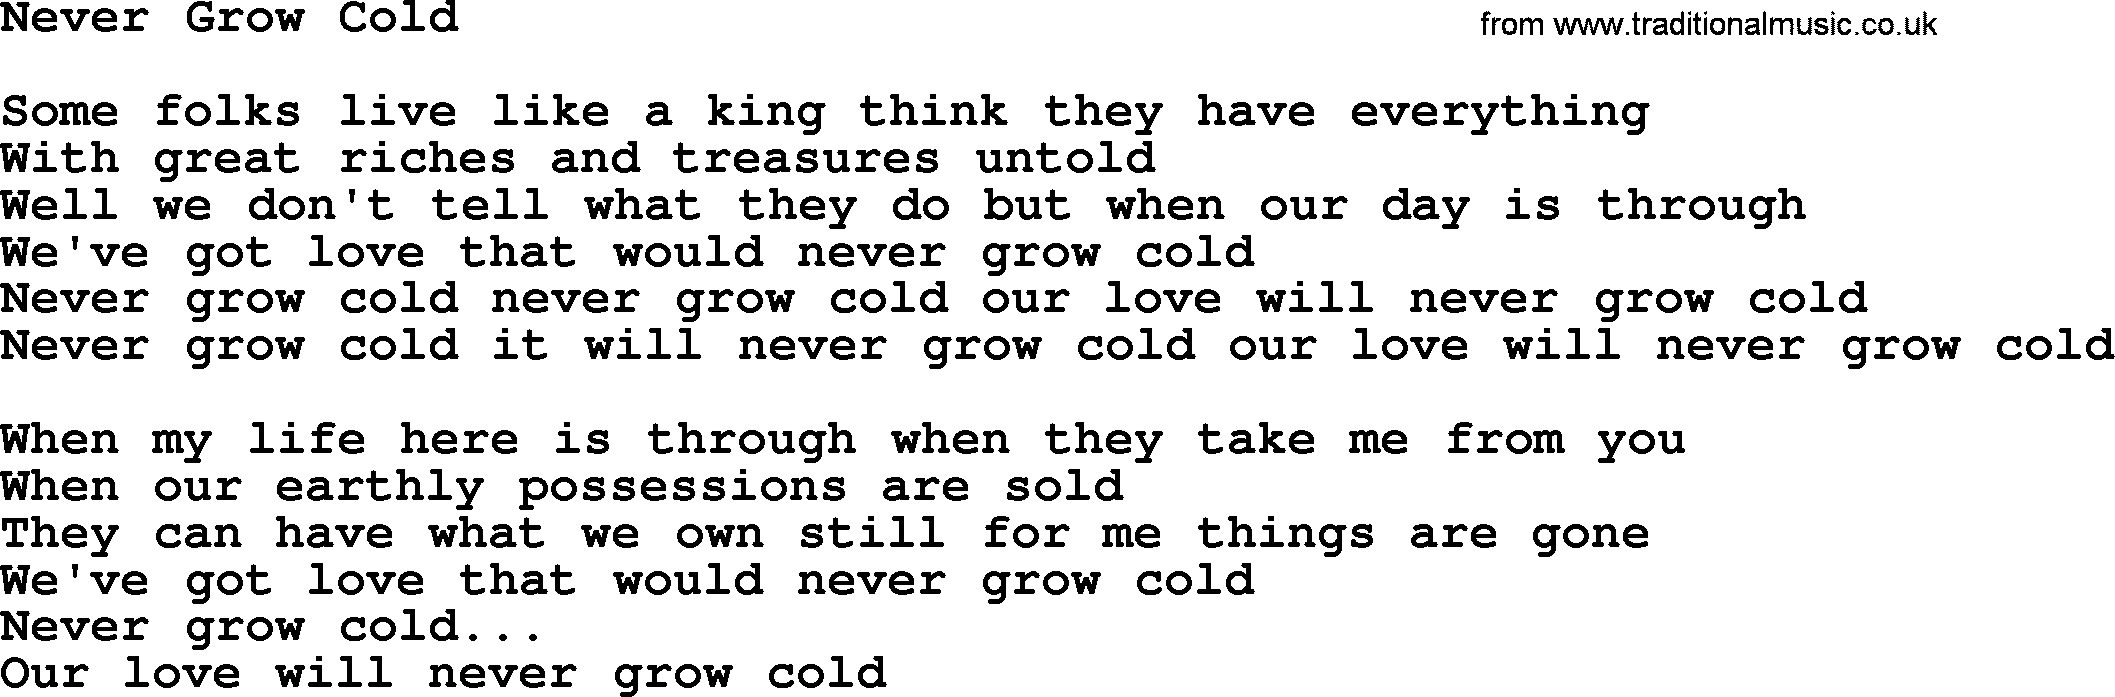 George Jones song: Never Grow Cold, lyrics